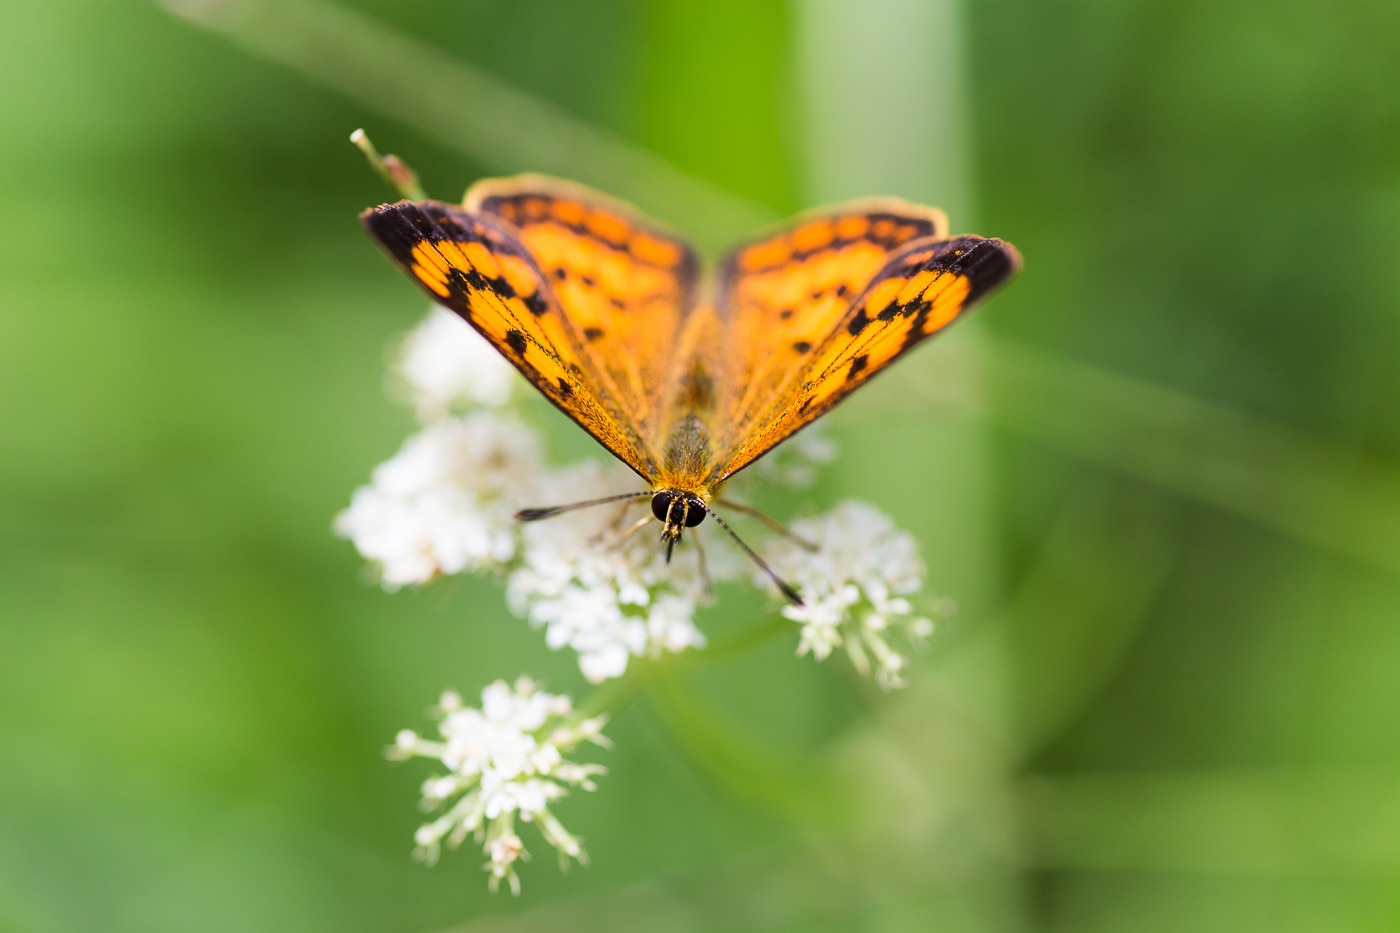 A copper butterfly